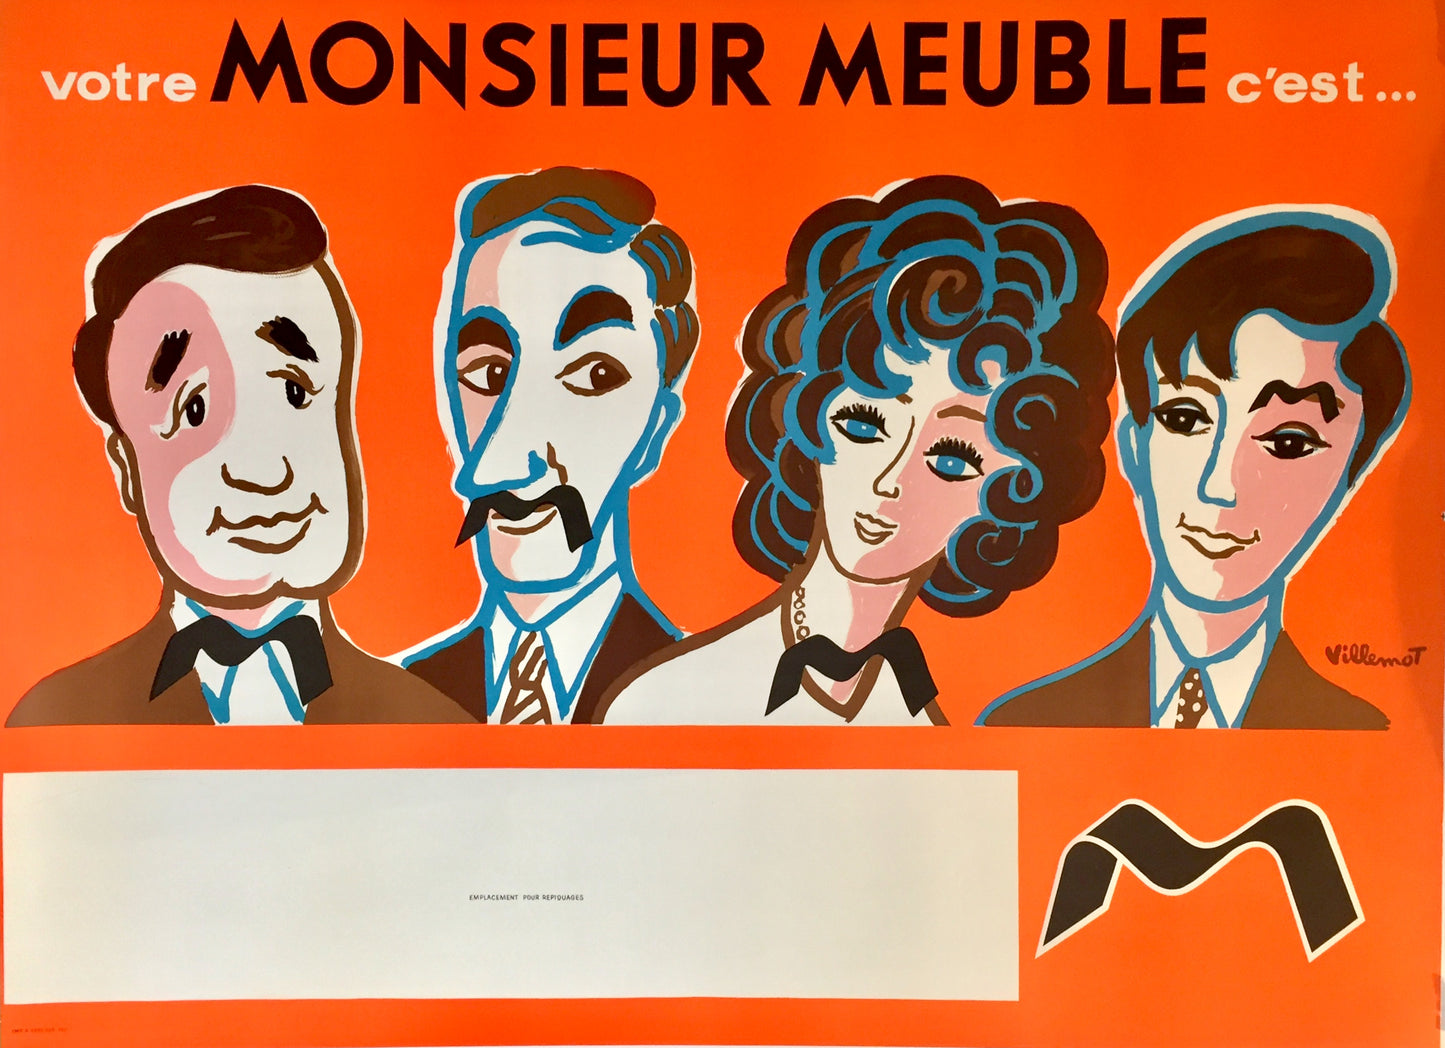 Monsieur Meuble by Villemot